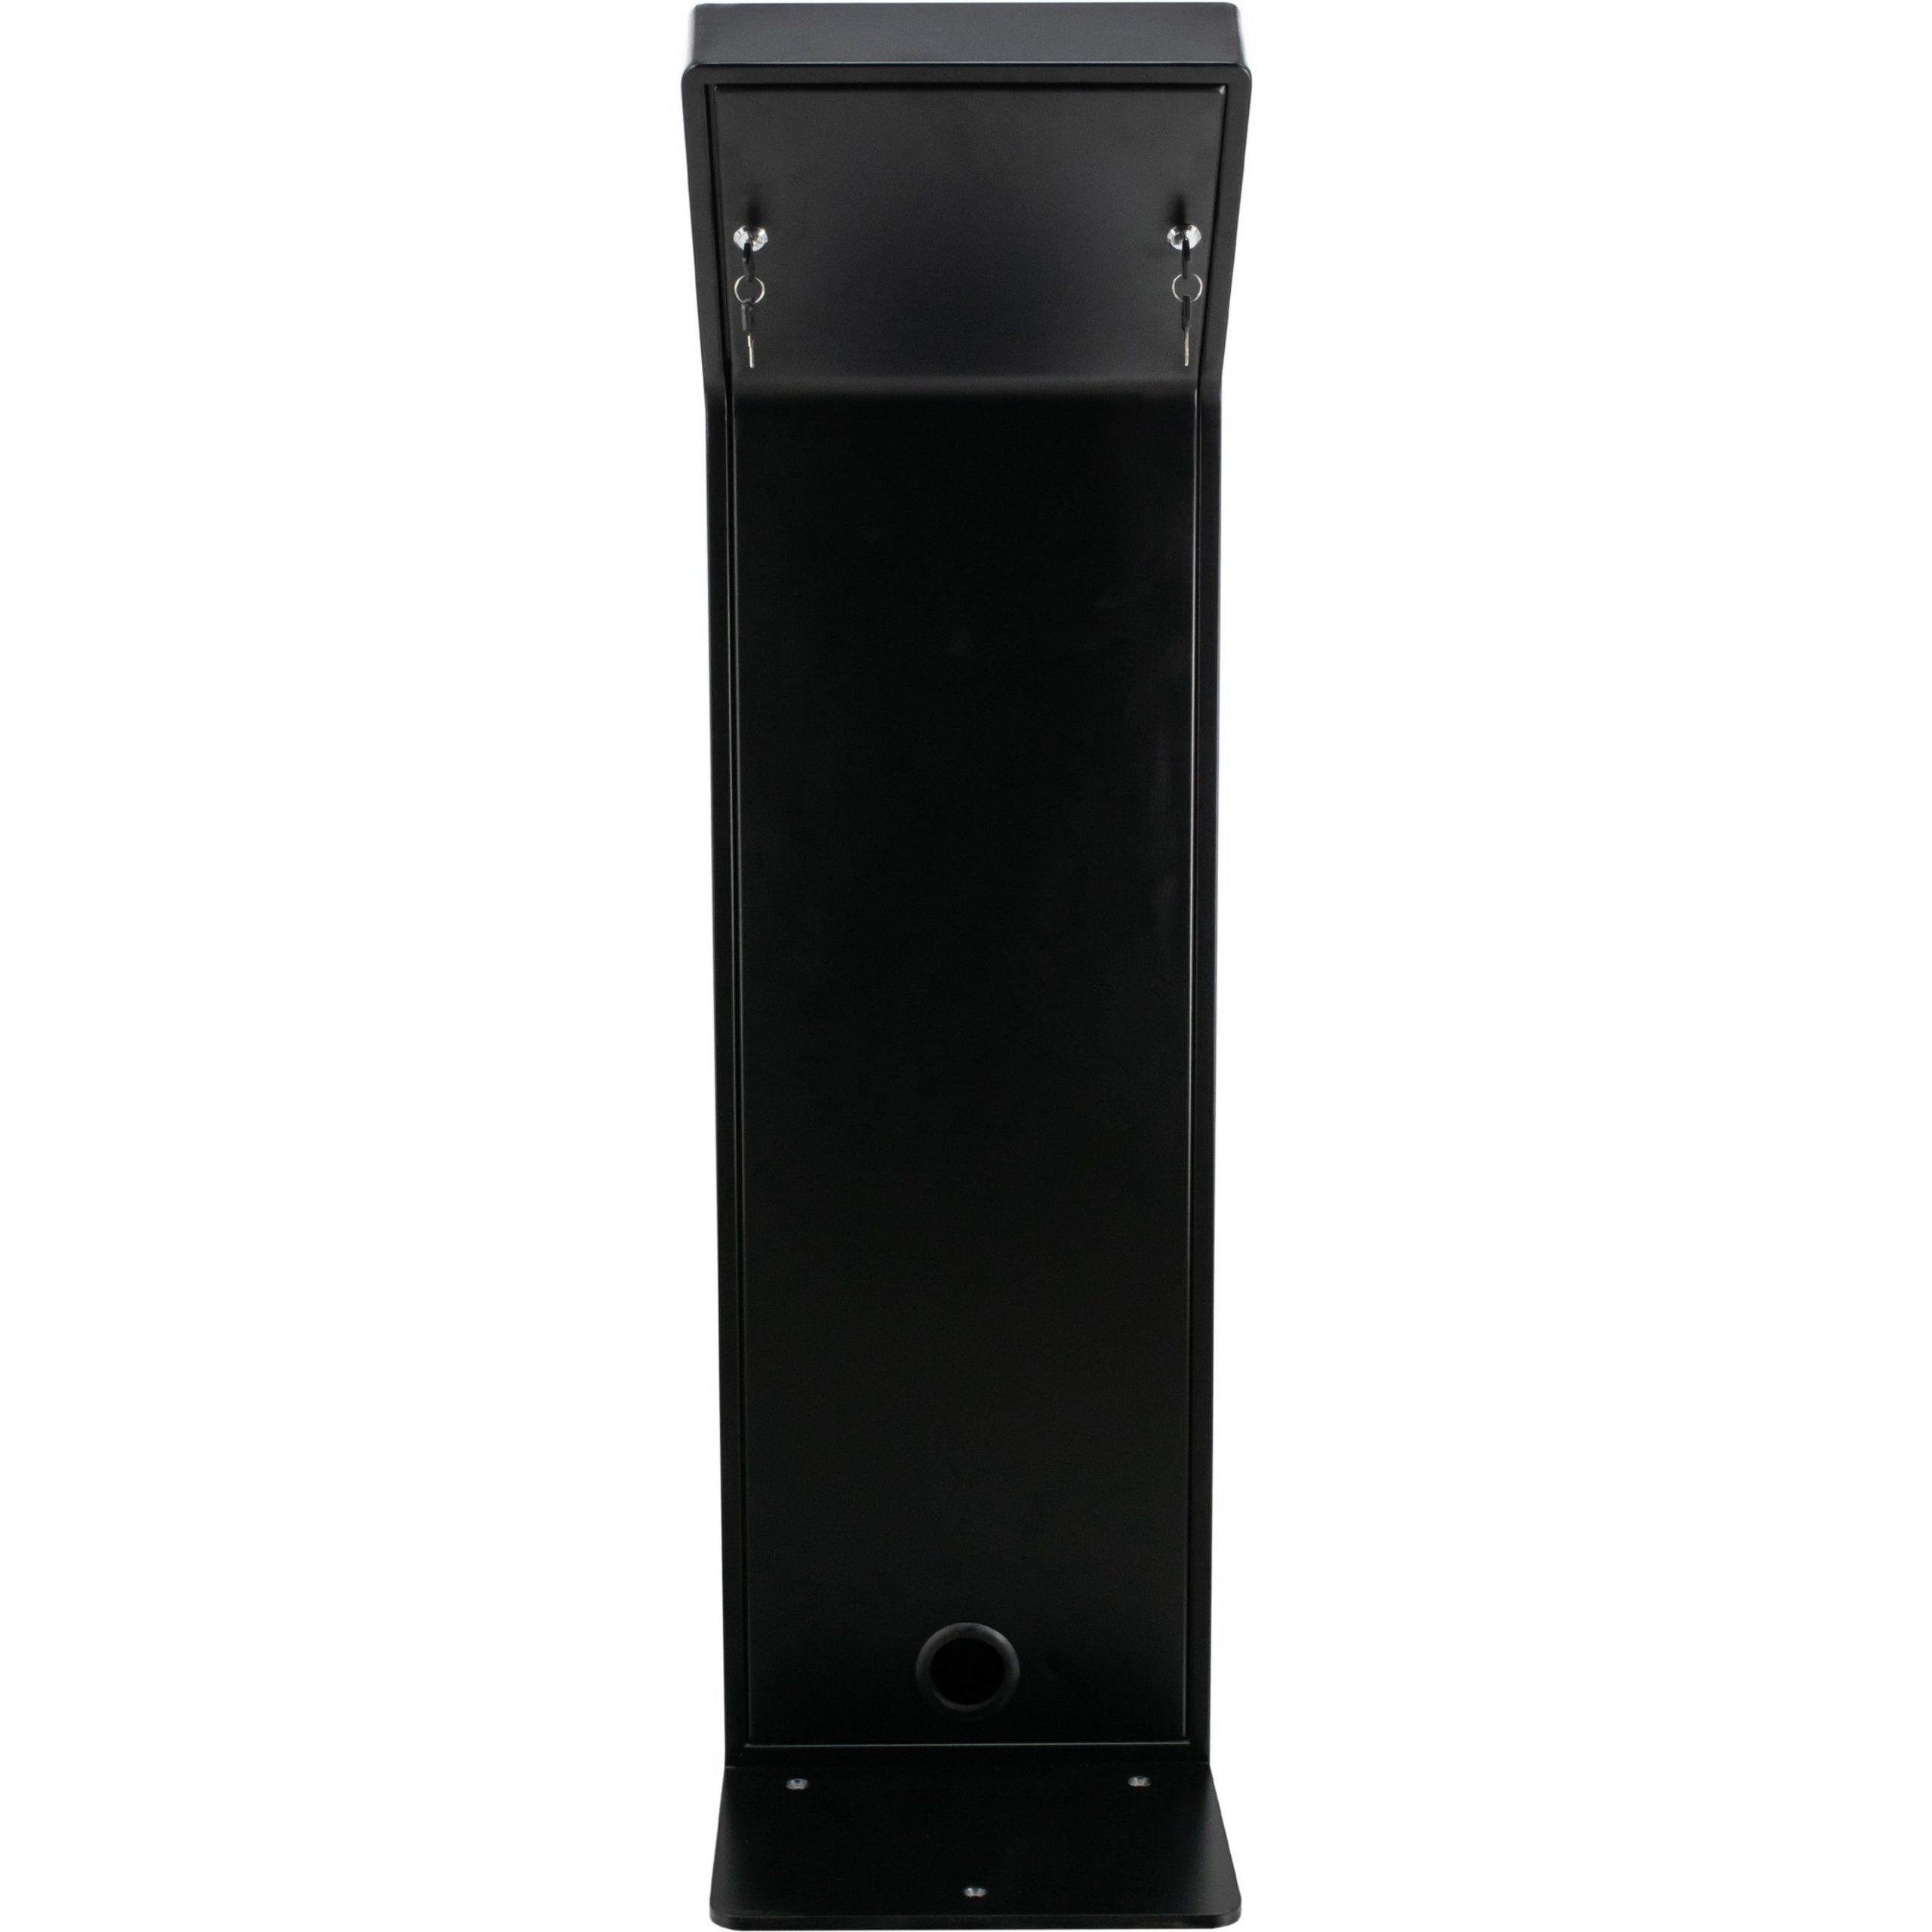 Cta Digital Accessories Premium Kiosk Stand Station for 9-11″ TabletsUp to 11″ Screen SupportFloorMetal PAD-KSDK